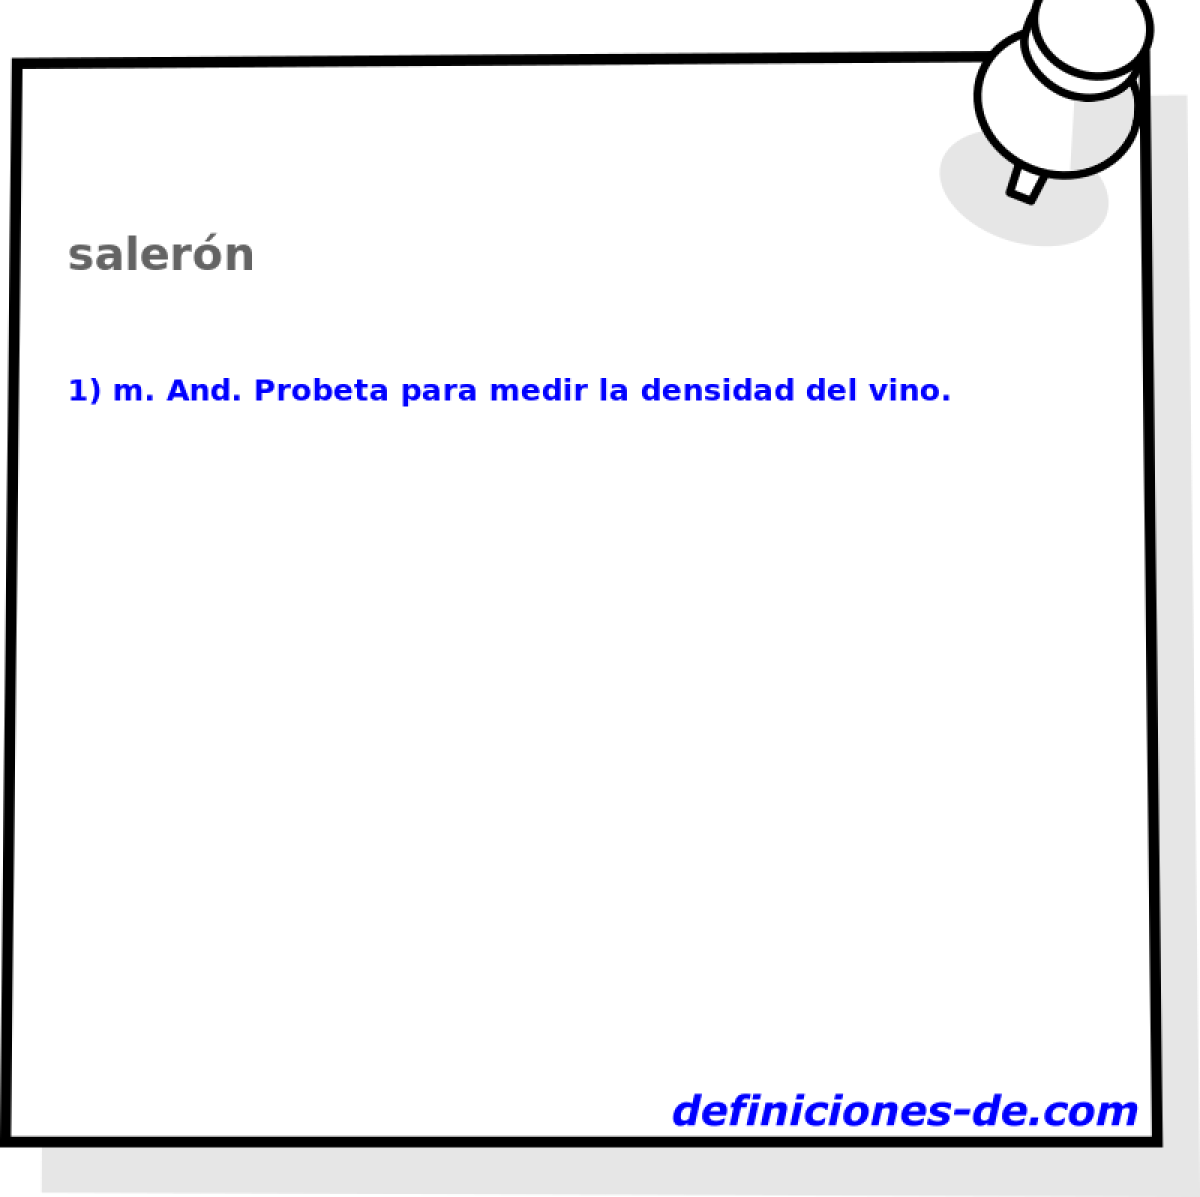 salern 